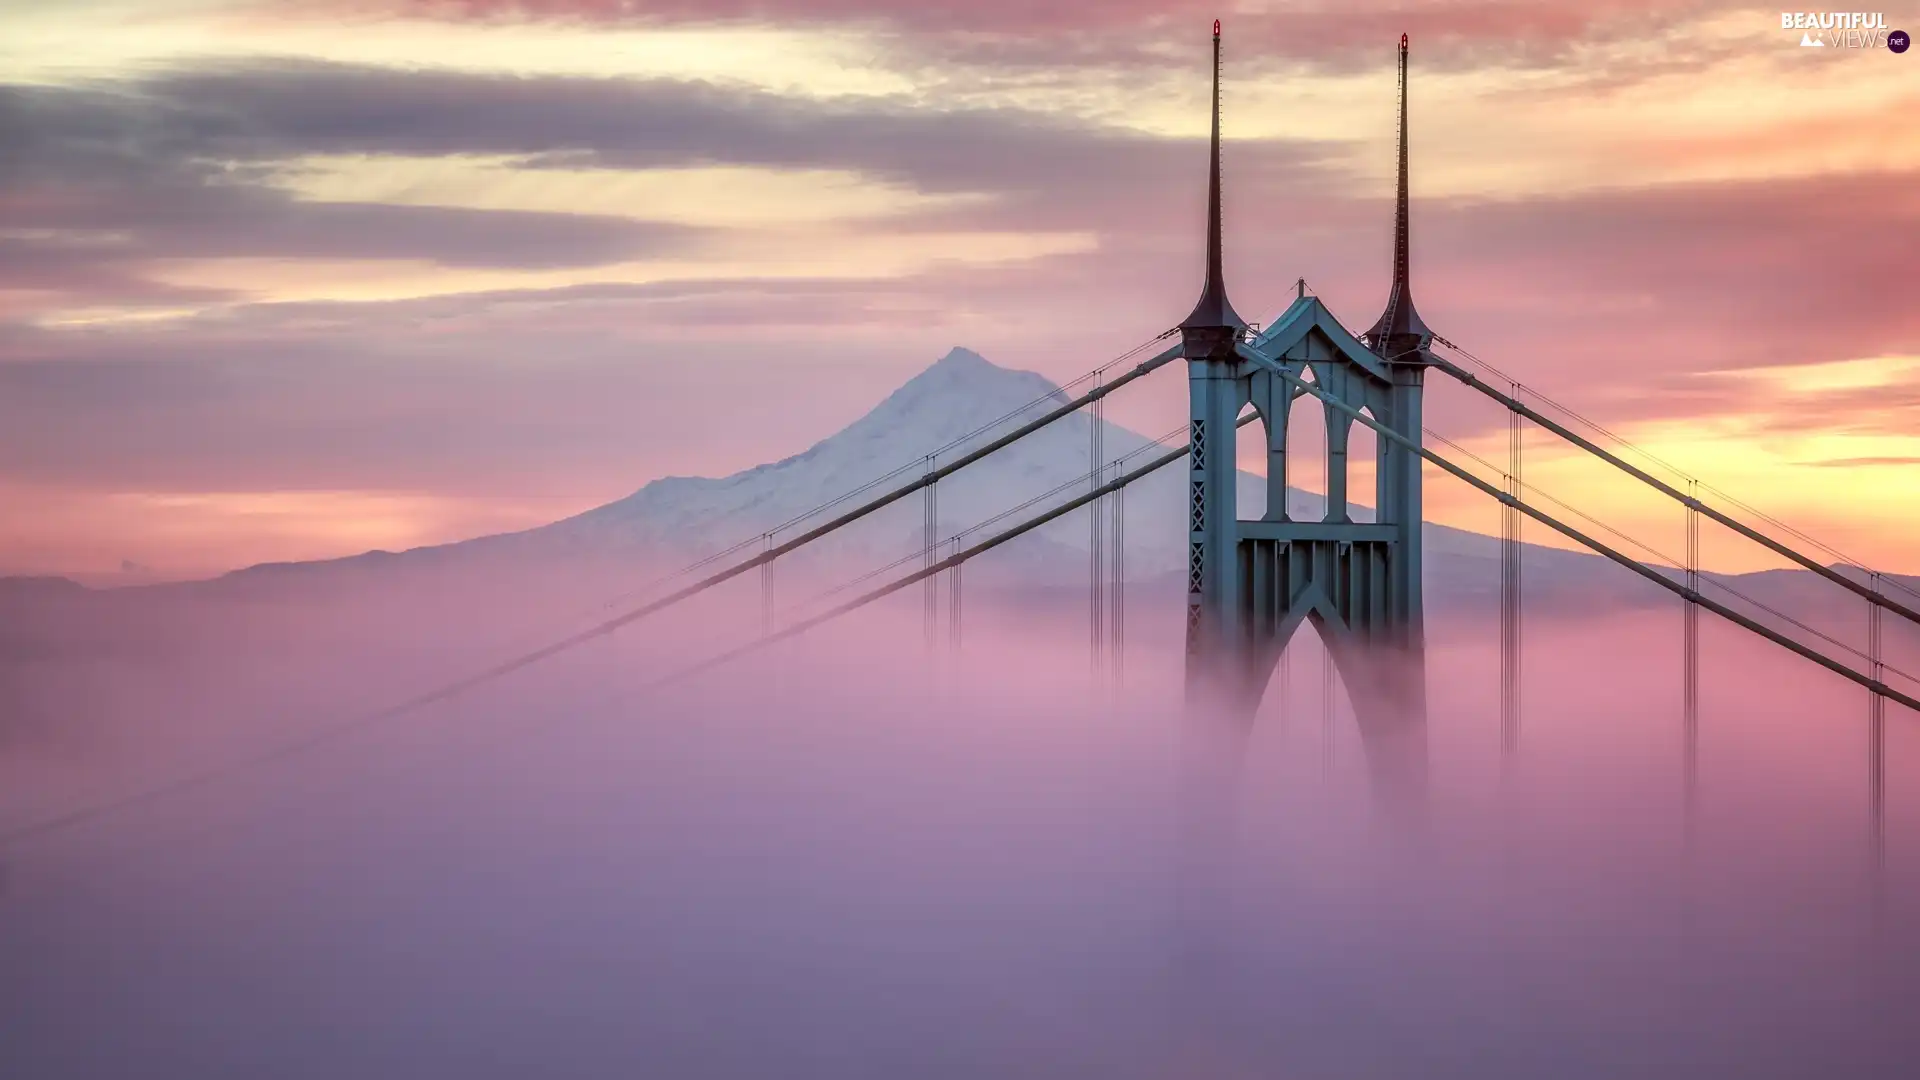 The United States, Fog, Portland, State of Oregon, St. Johns Bridge